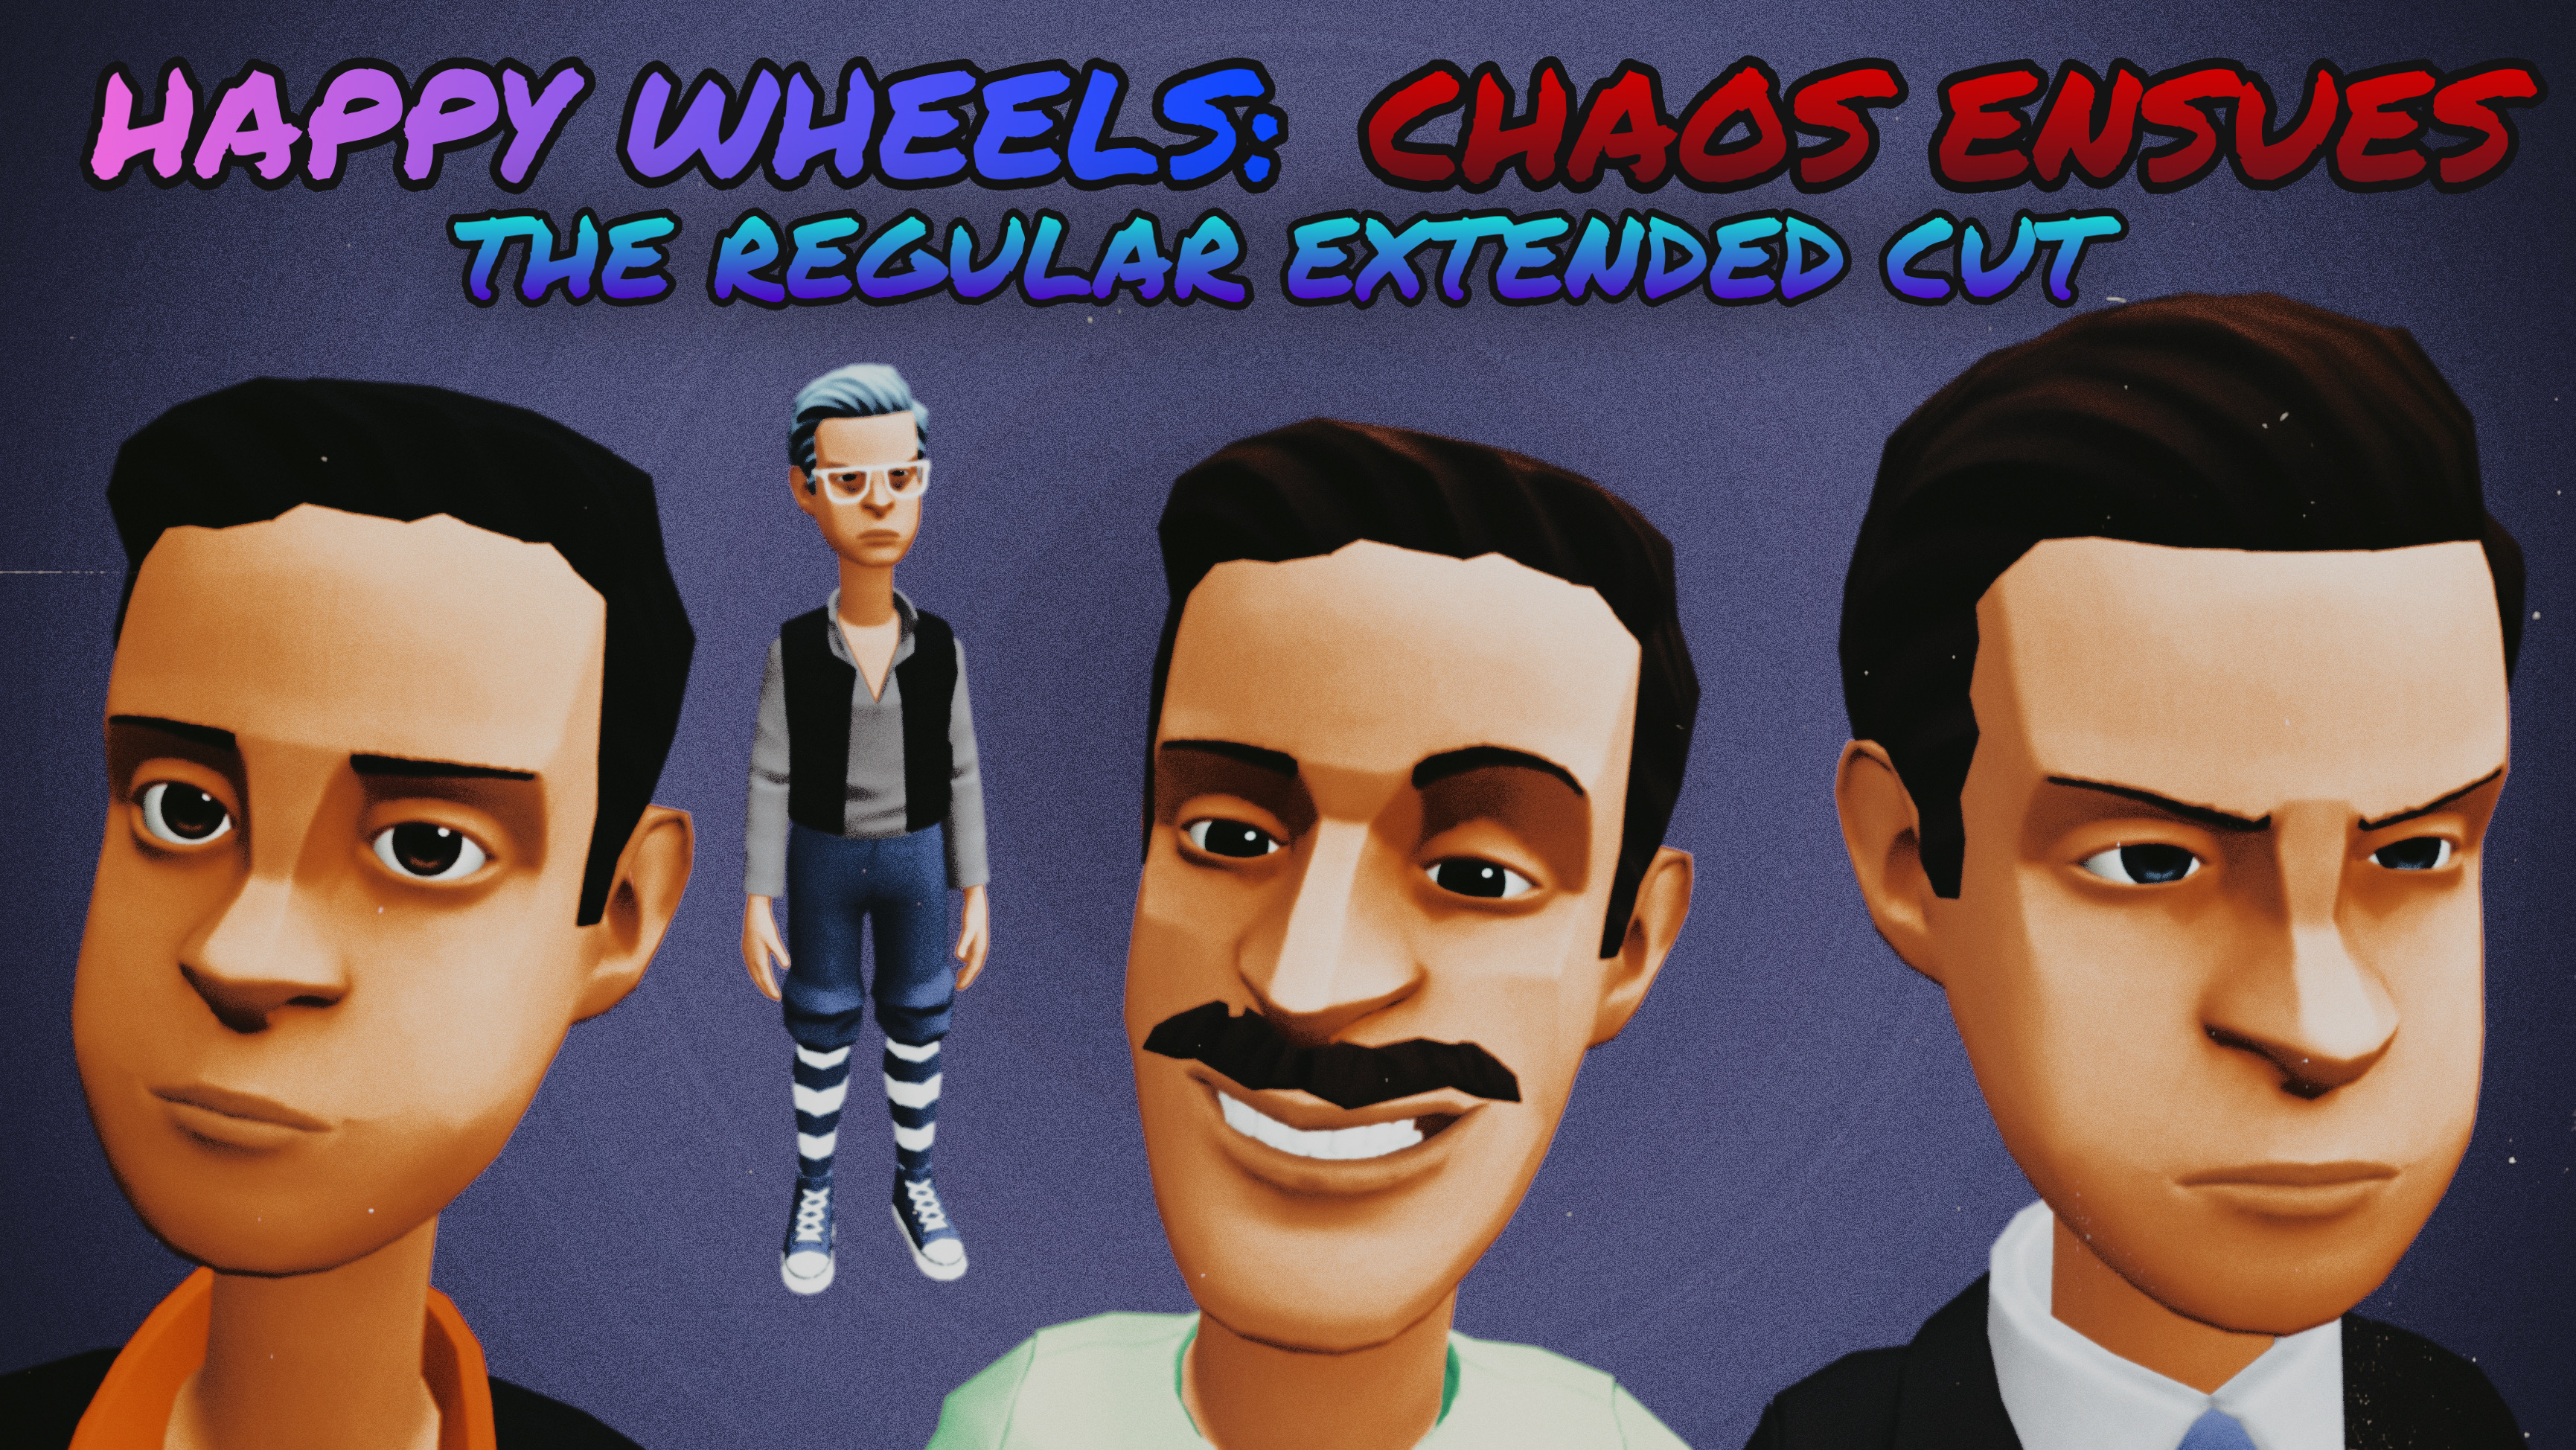 Machinima's Animated Adaptation Of 'Happy Wheels' Video Game